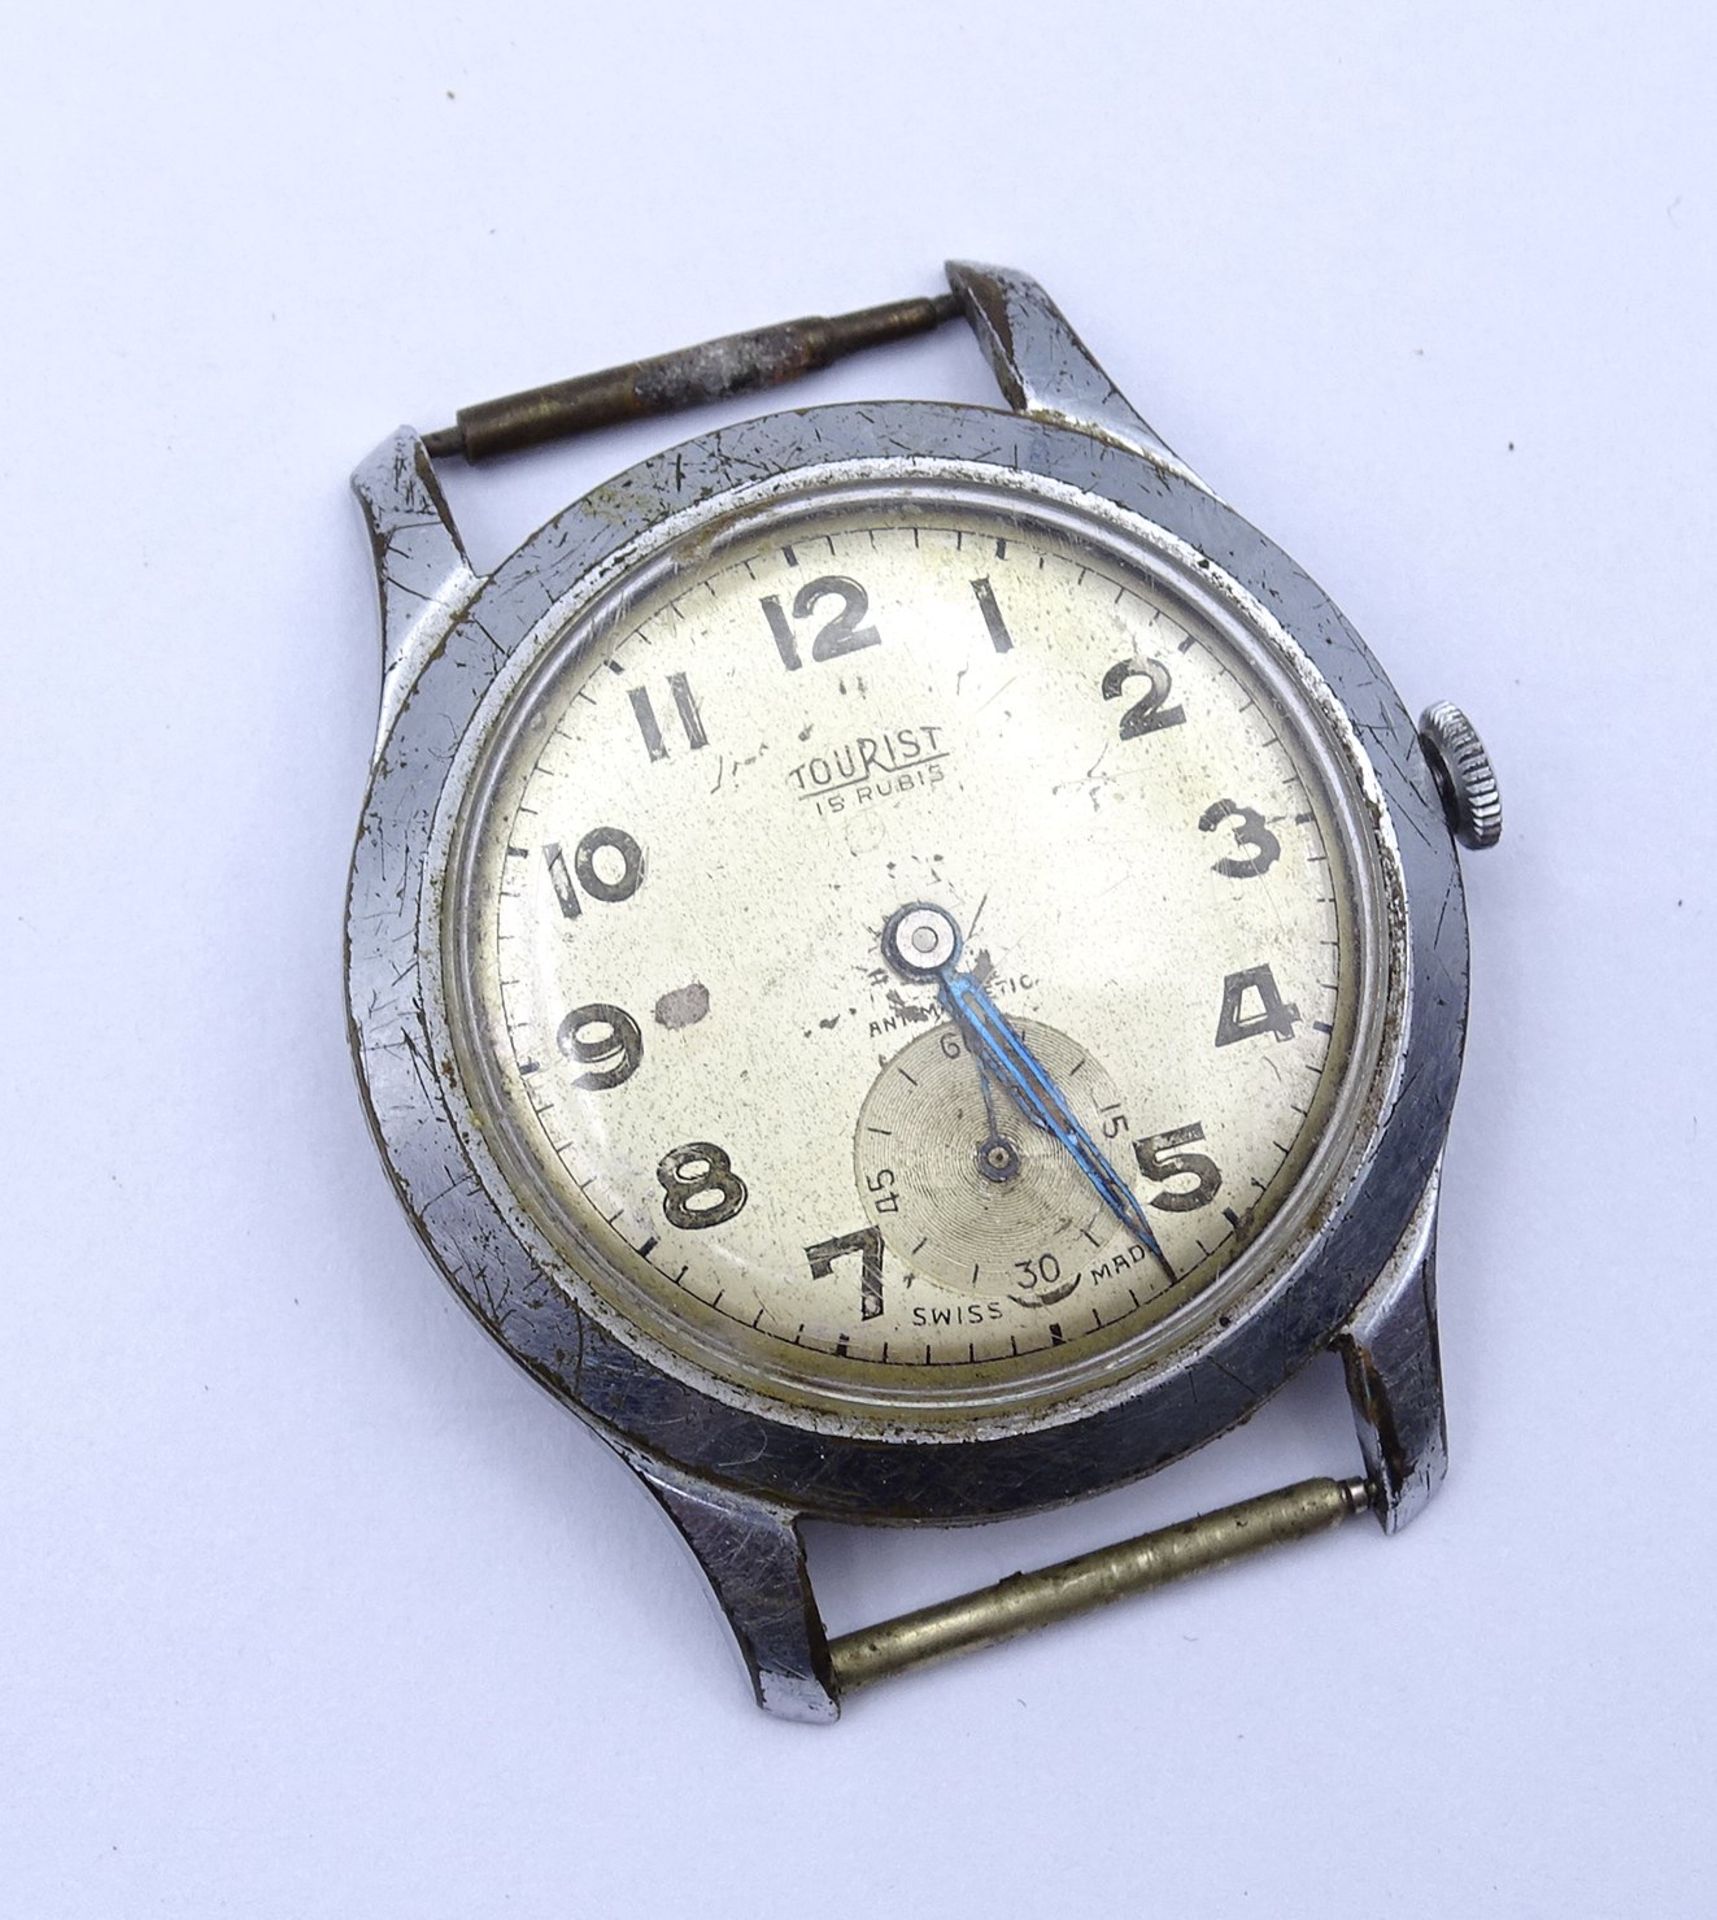 Herren Armbanduhr "Tourist", mechanisch, Werk läuft kurz an, (kompl.aufgezogen), D. 35,0mm, Alters- - Image 2 of 3